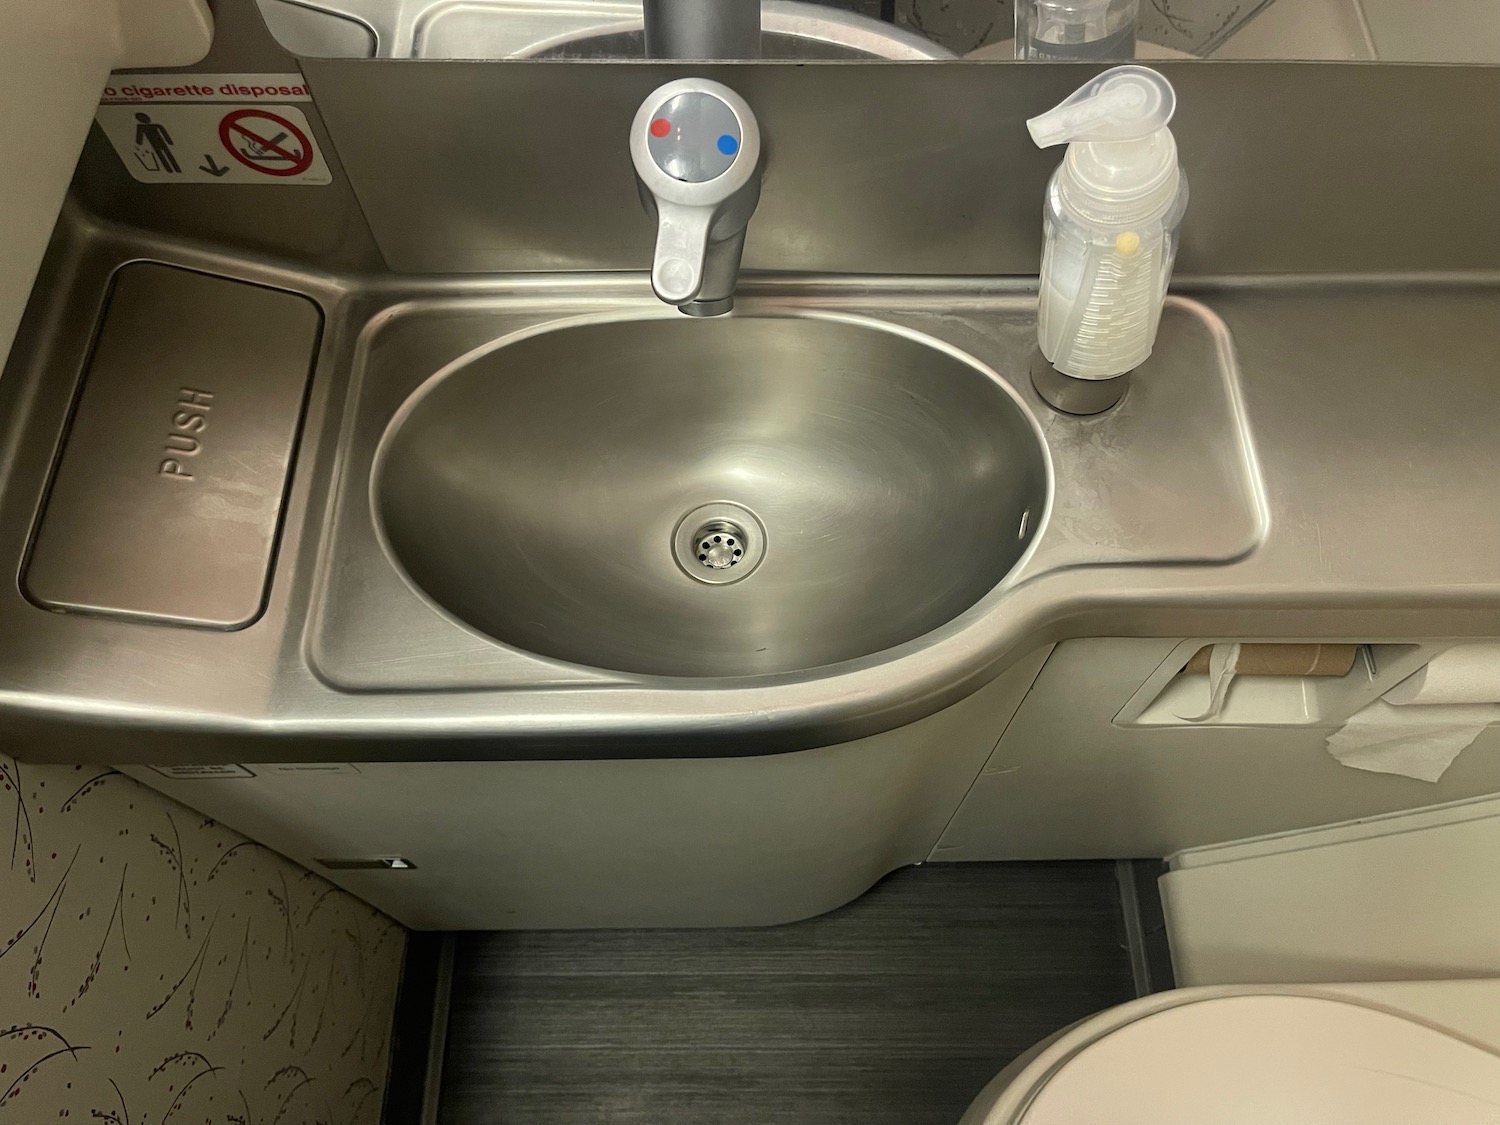 a sink in a plane